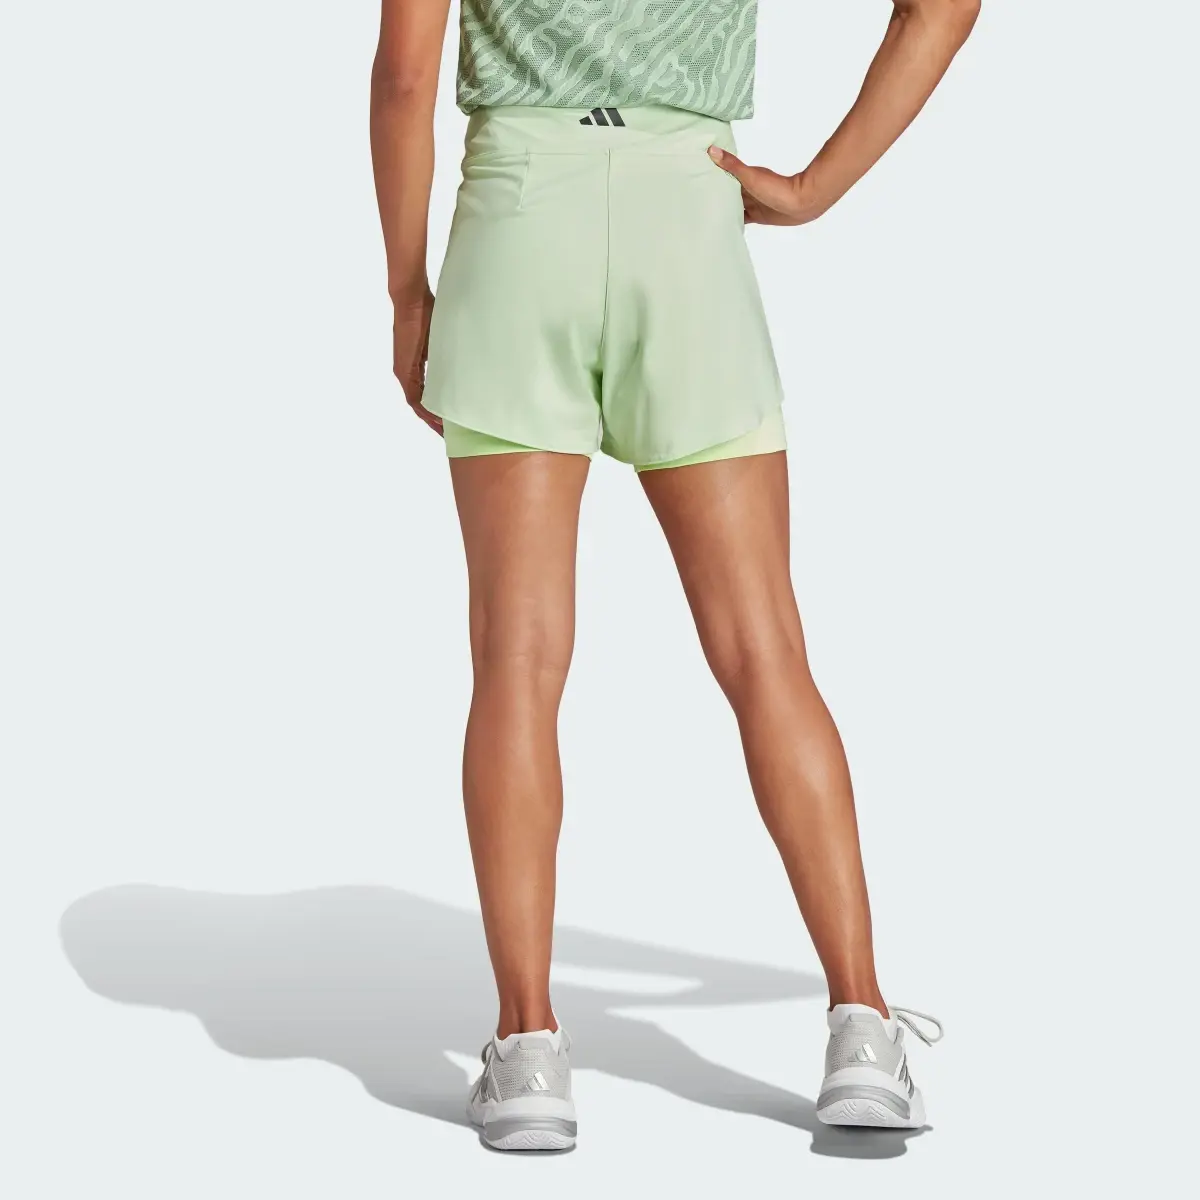 Adidas Tennis Match Shorts. 2